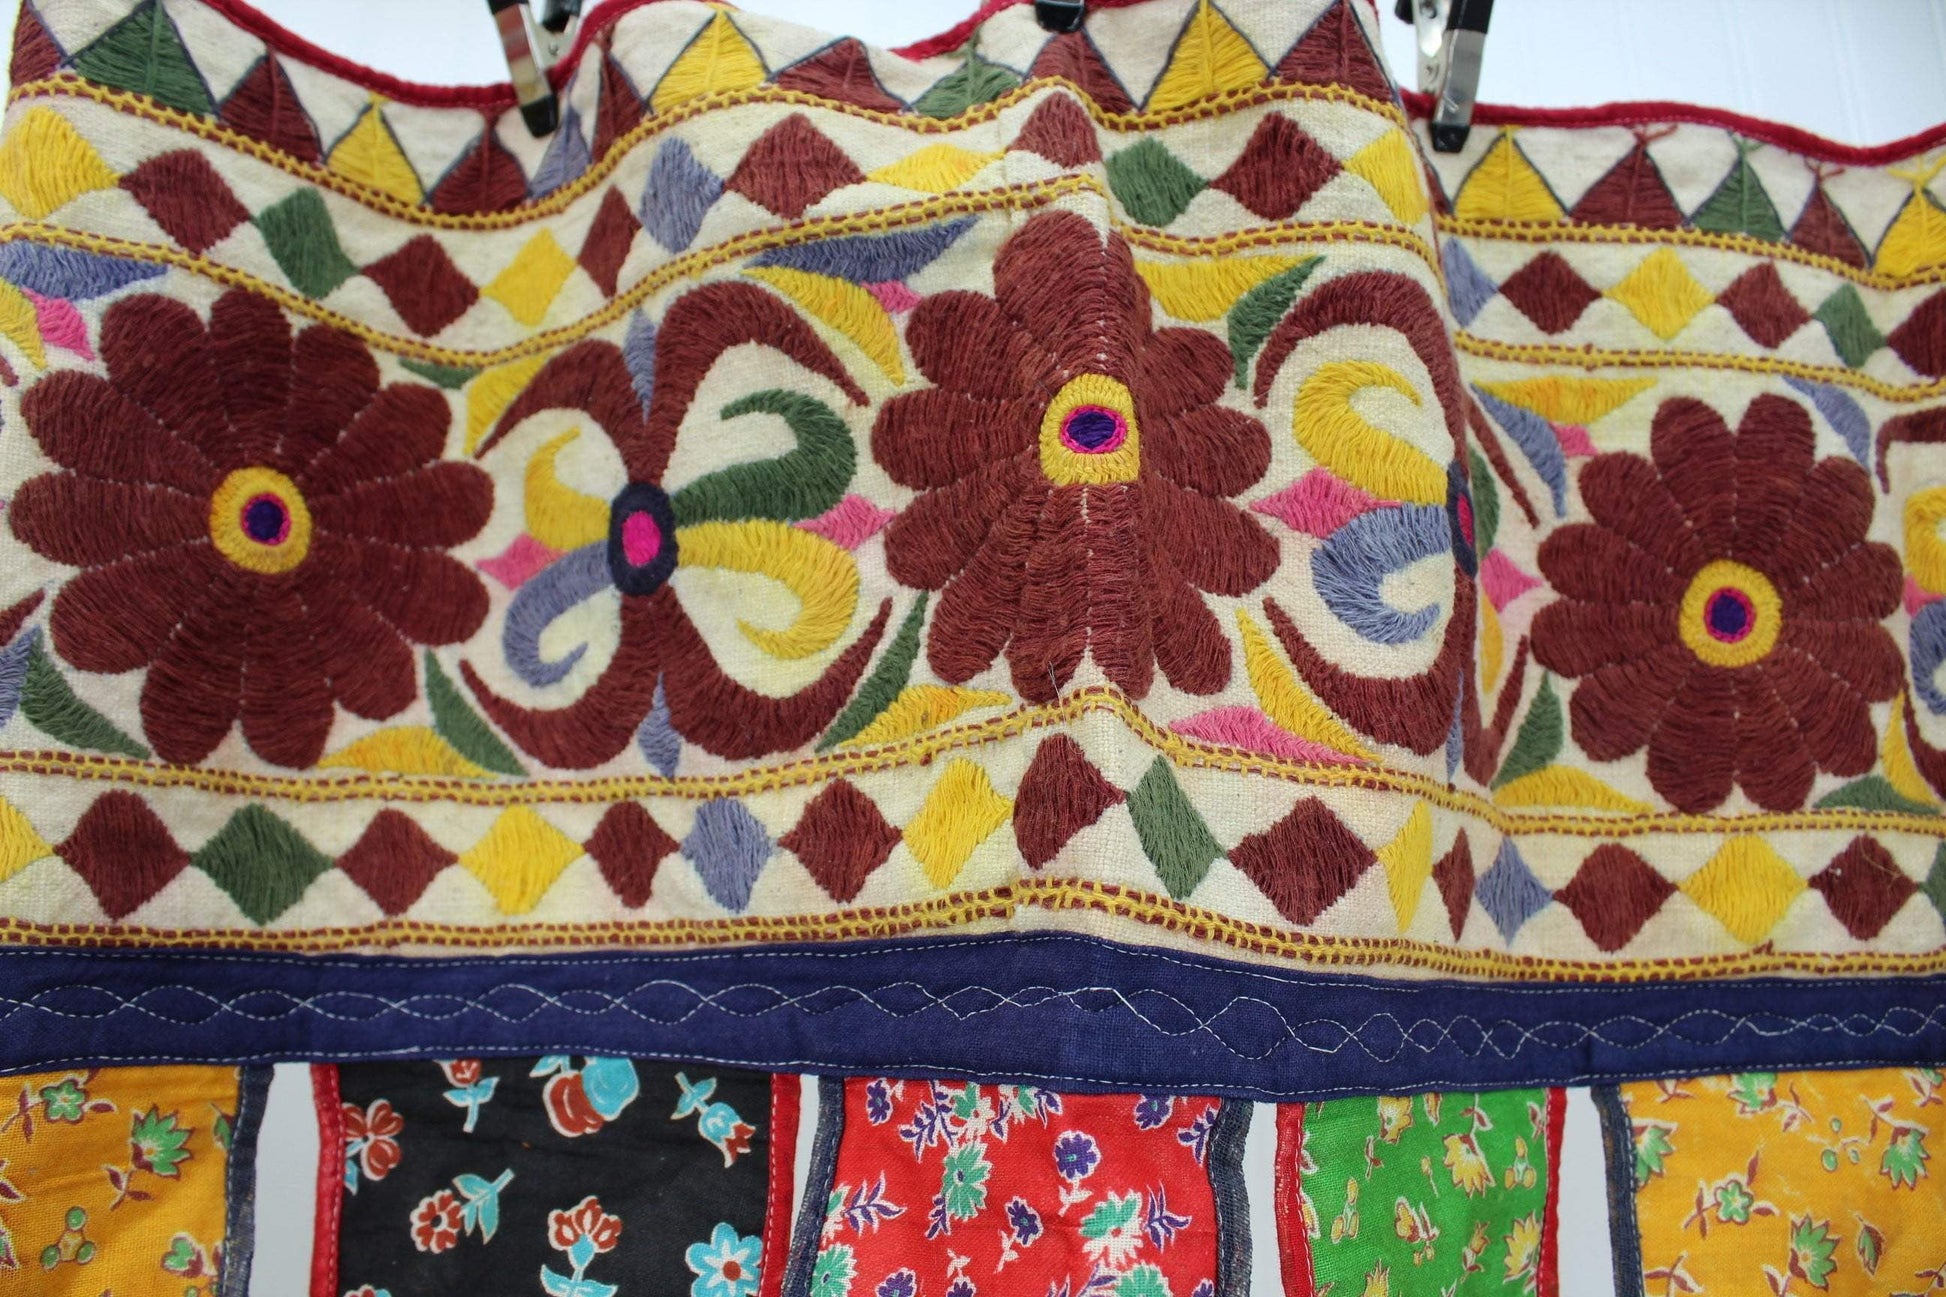 Vintage India Toran Window Door Valance - Patchwork Embroidery Flowers Fleur de Lis bright colors